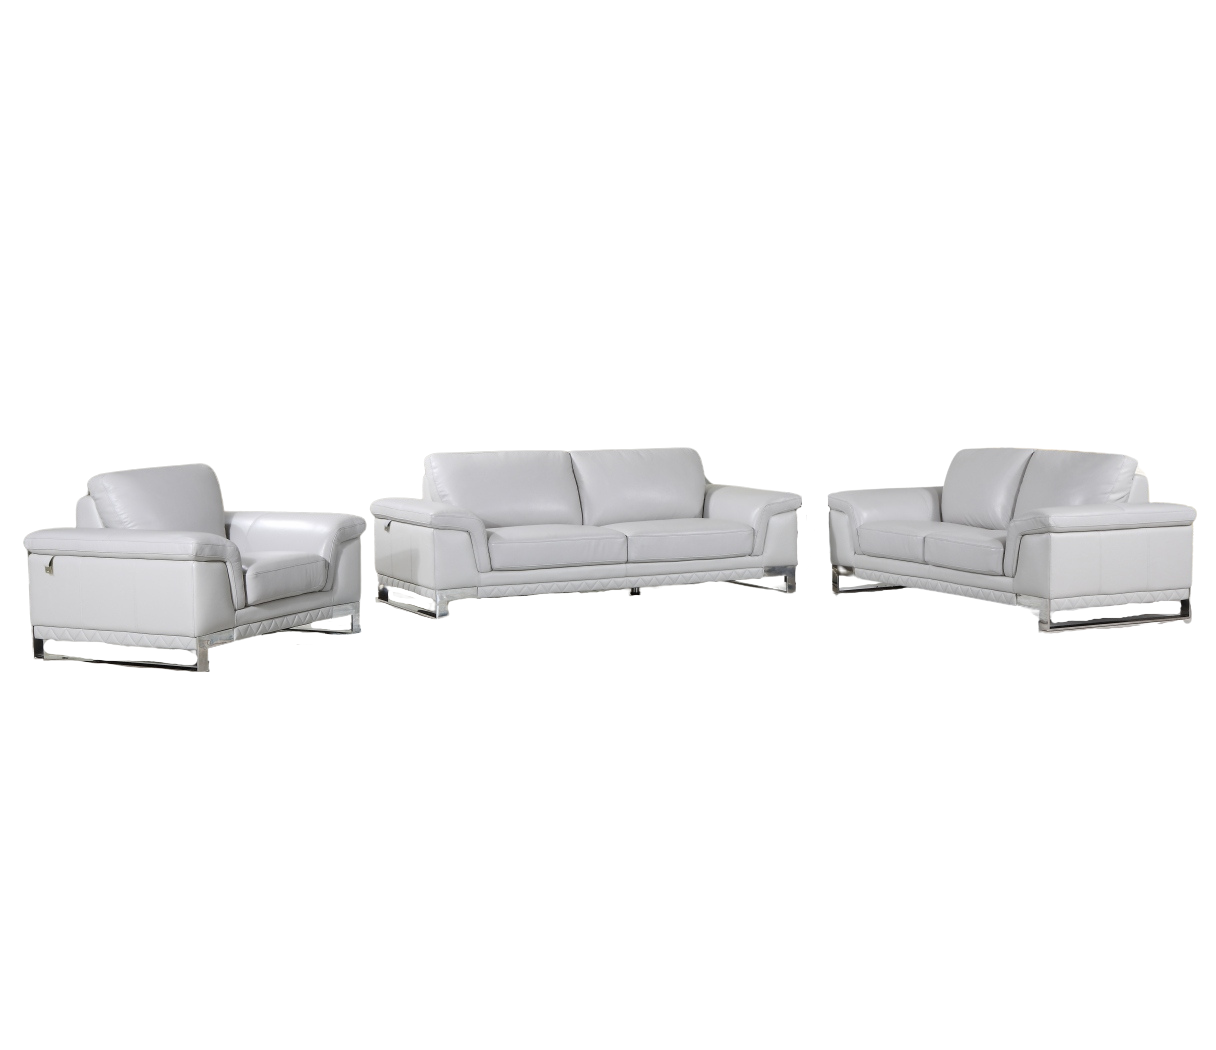 Three Piece Indoor Light Gray Italian Leather Six Person Seating Set-329616-1